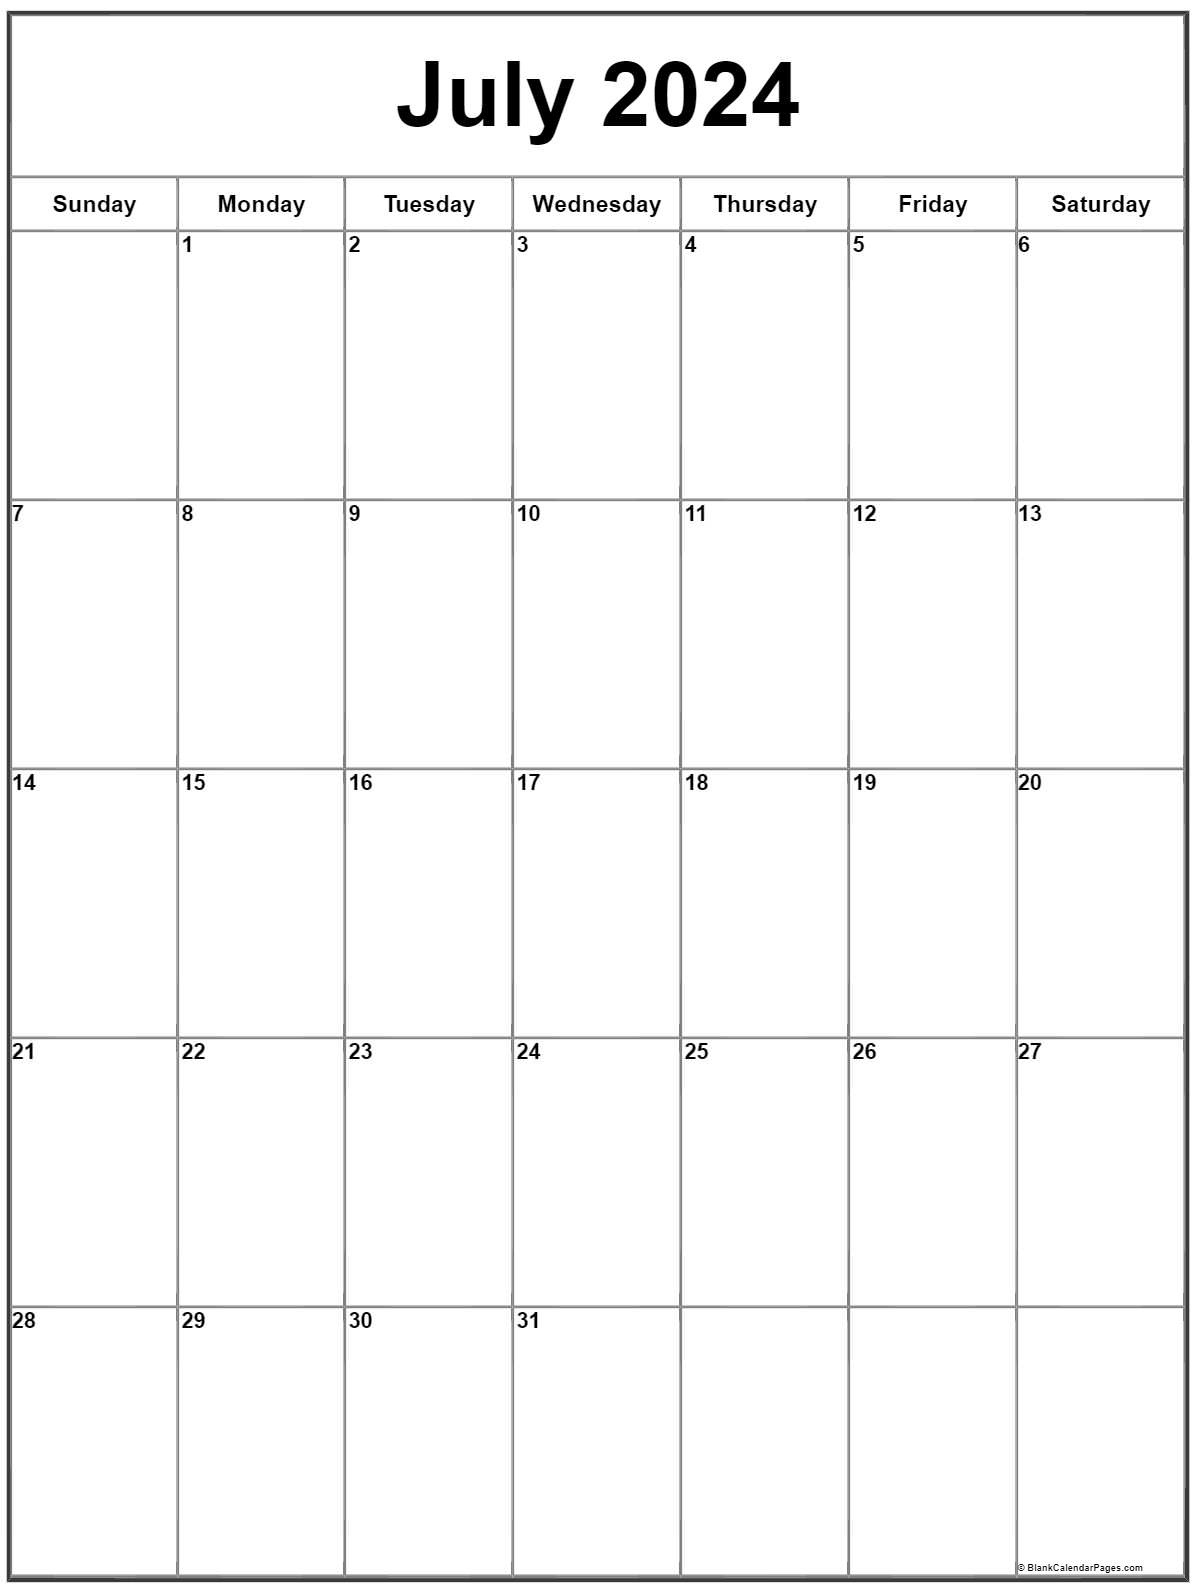 July 2024 Vertical Calendar | Portrait within July 2024 Portrait Calendar